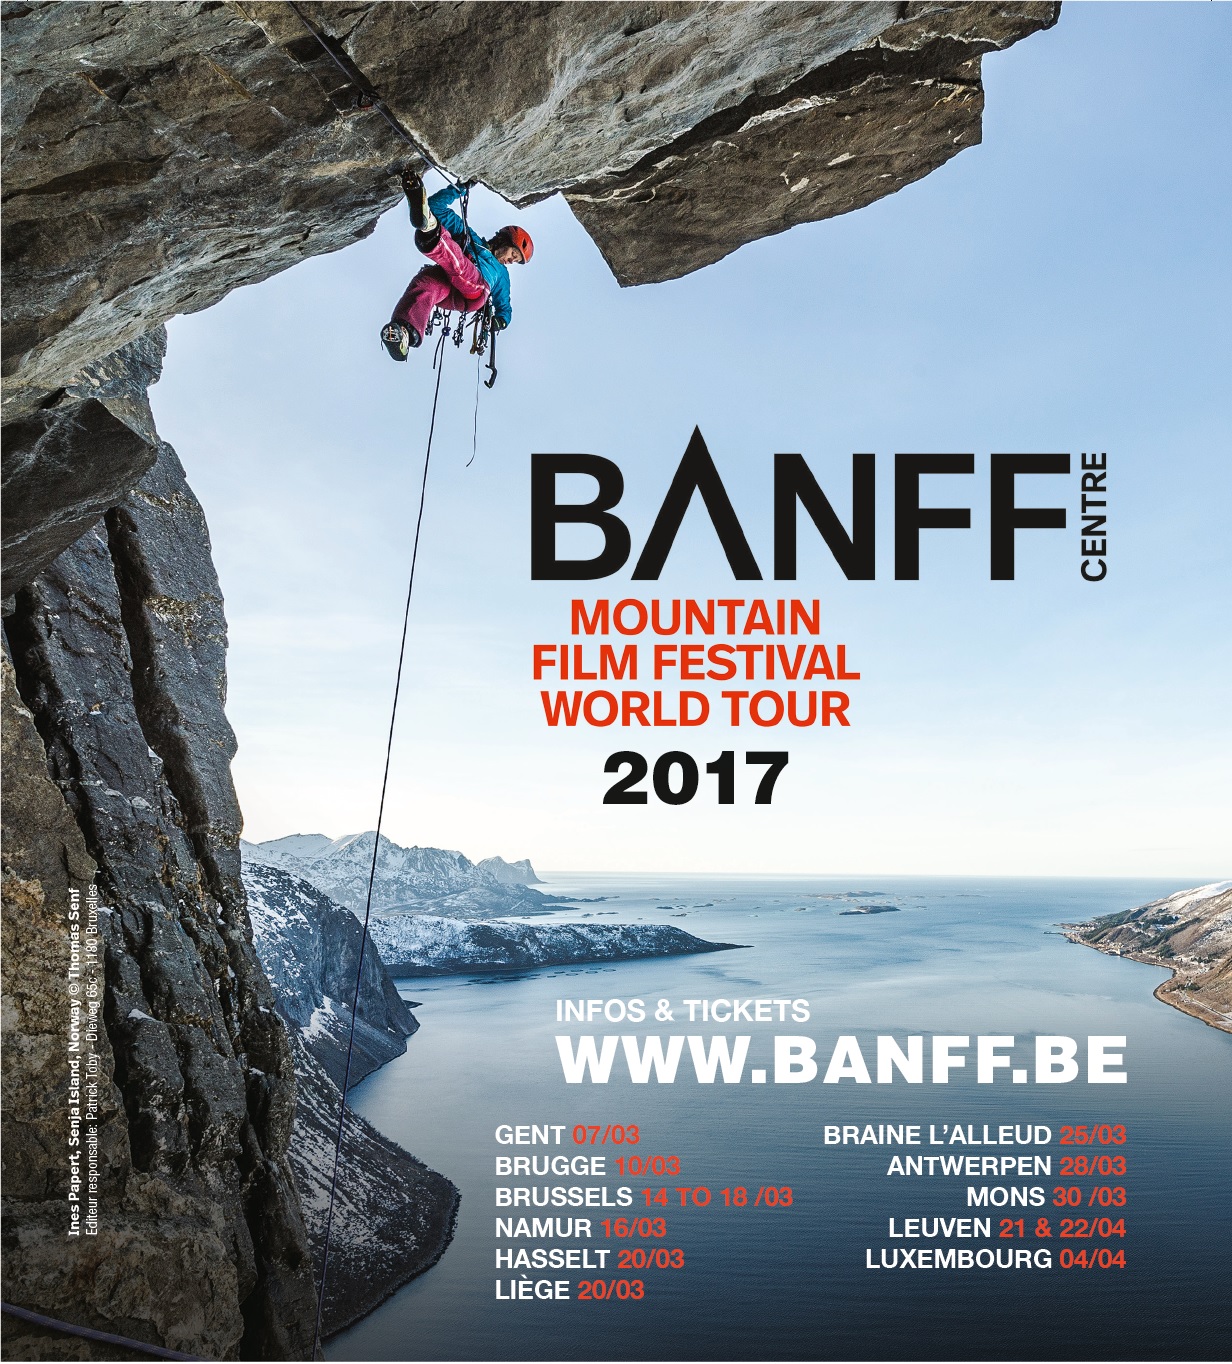 Banff Mountain Film Festival 2017